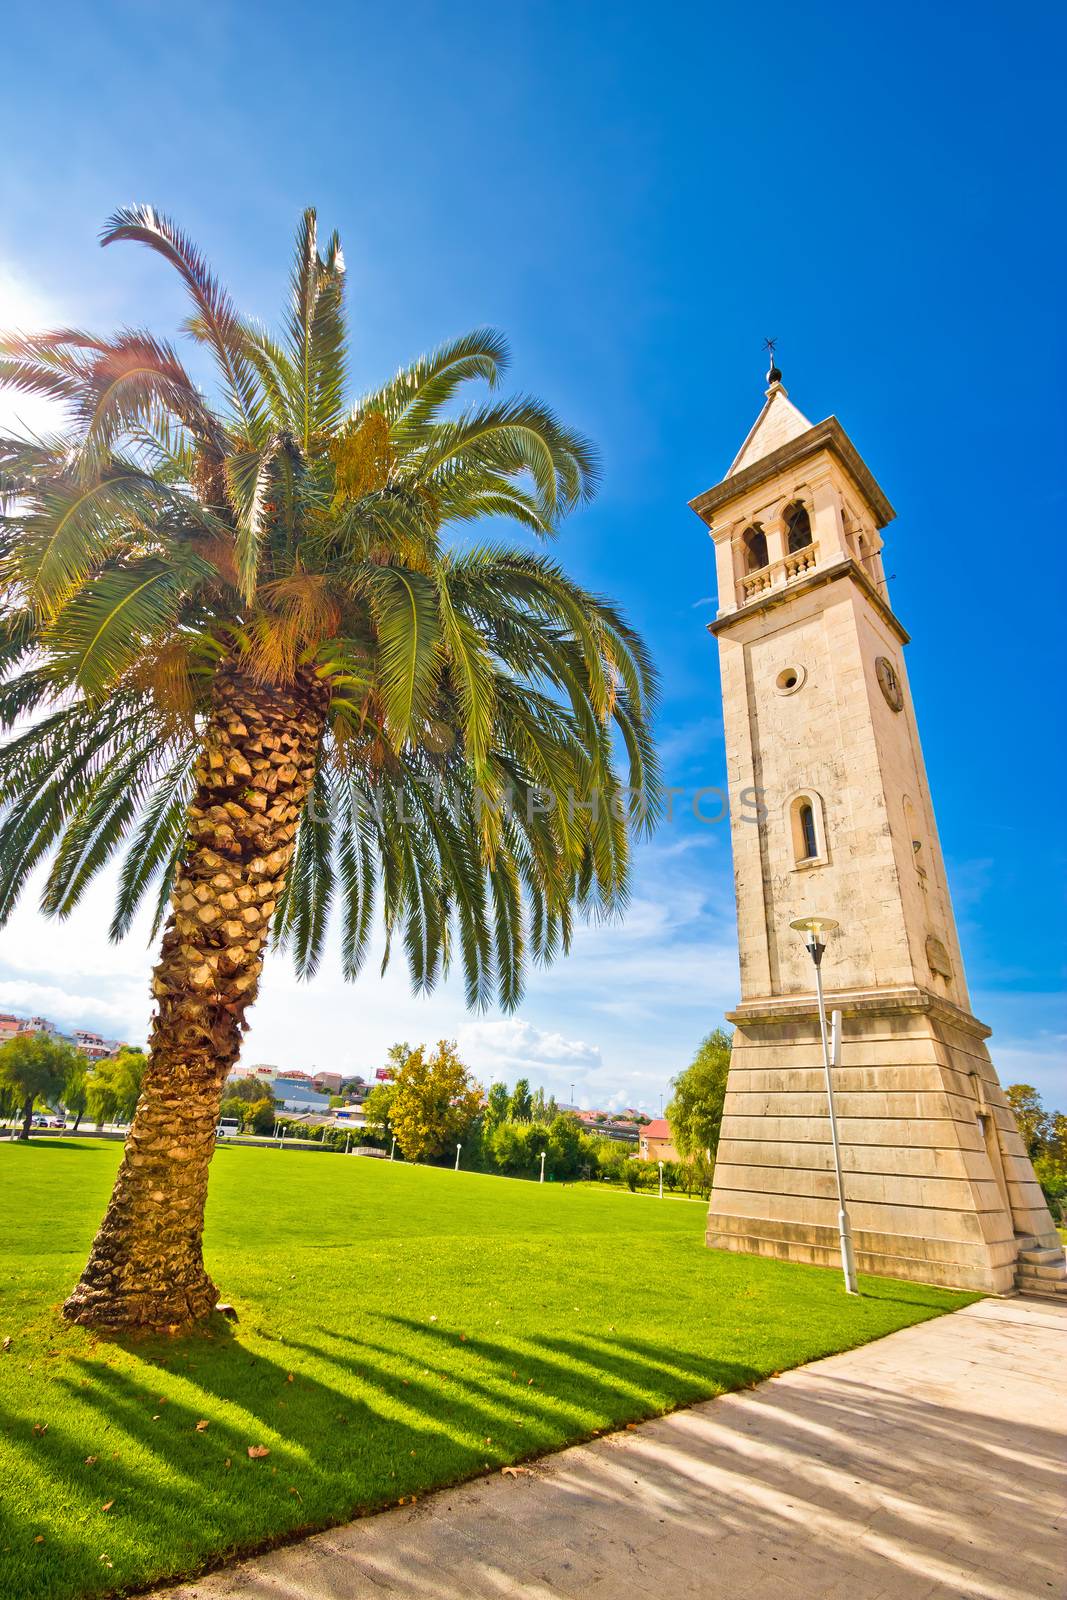 Town of Solin stone church tower, Dalmatia, Croatia